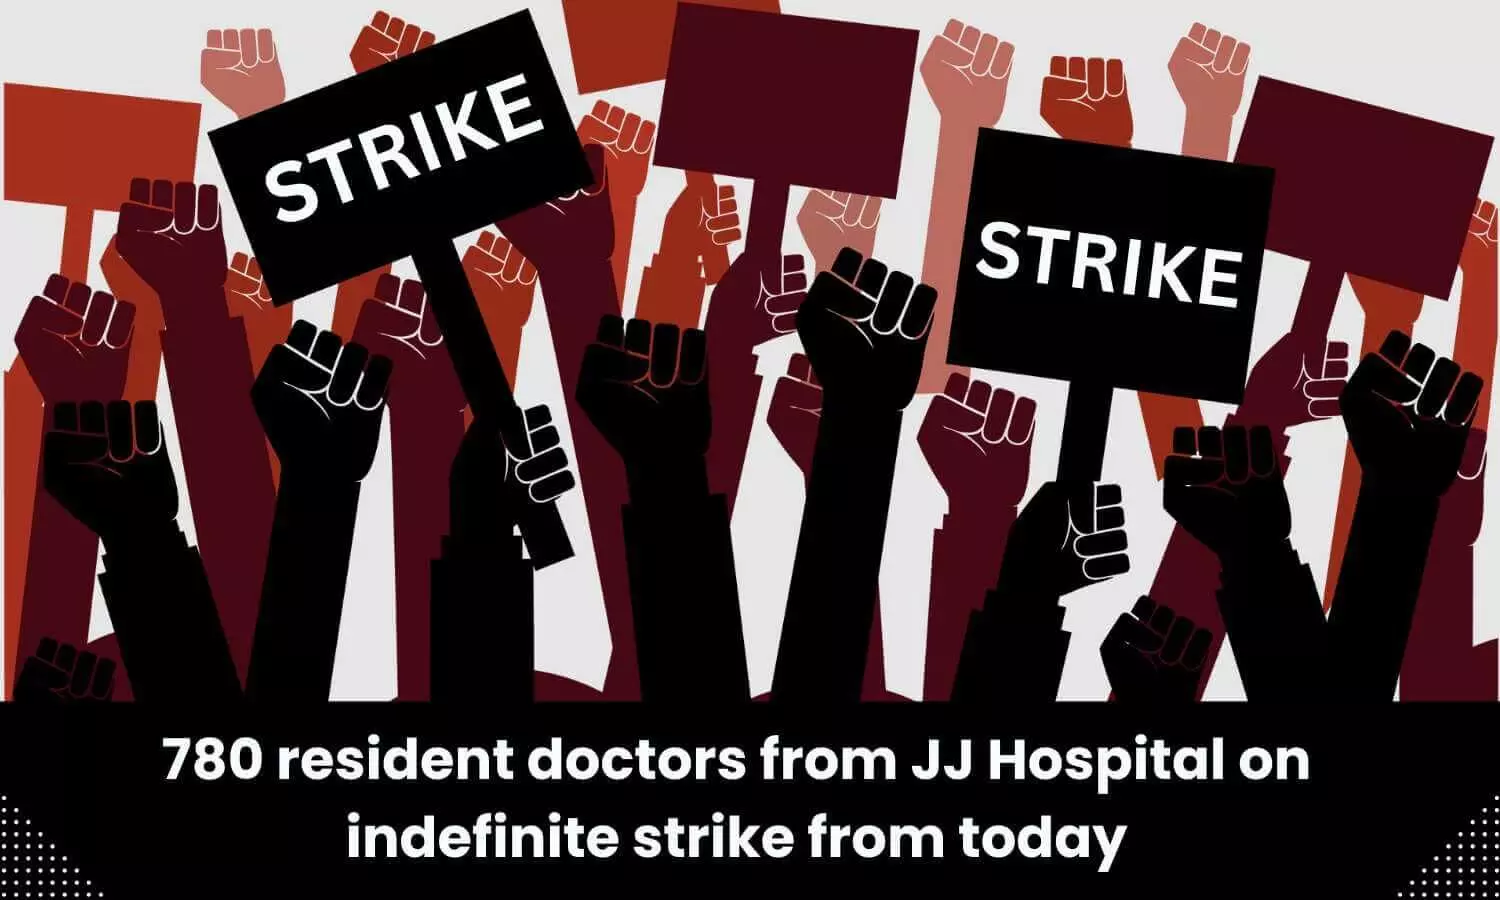 JJ Hospital 780 resident doctors on indefinite strike from today